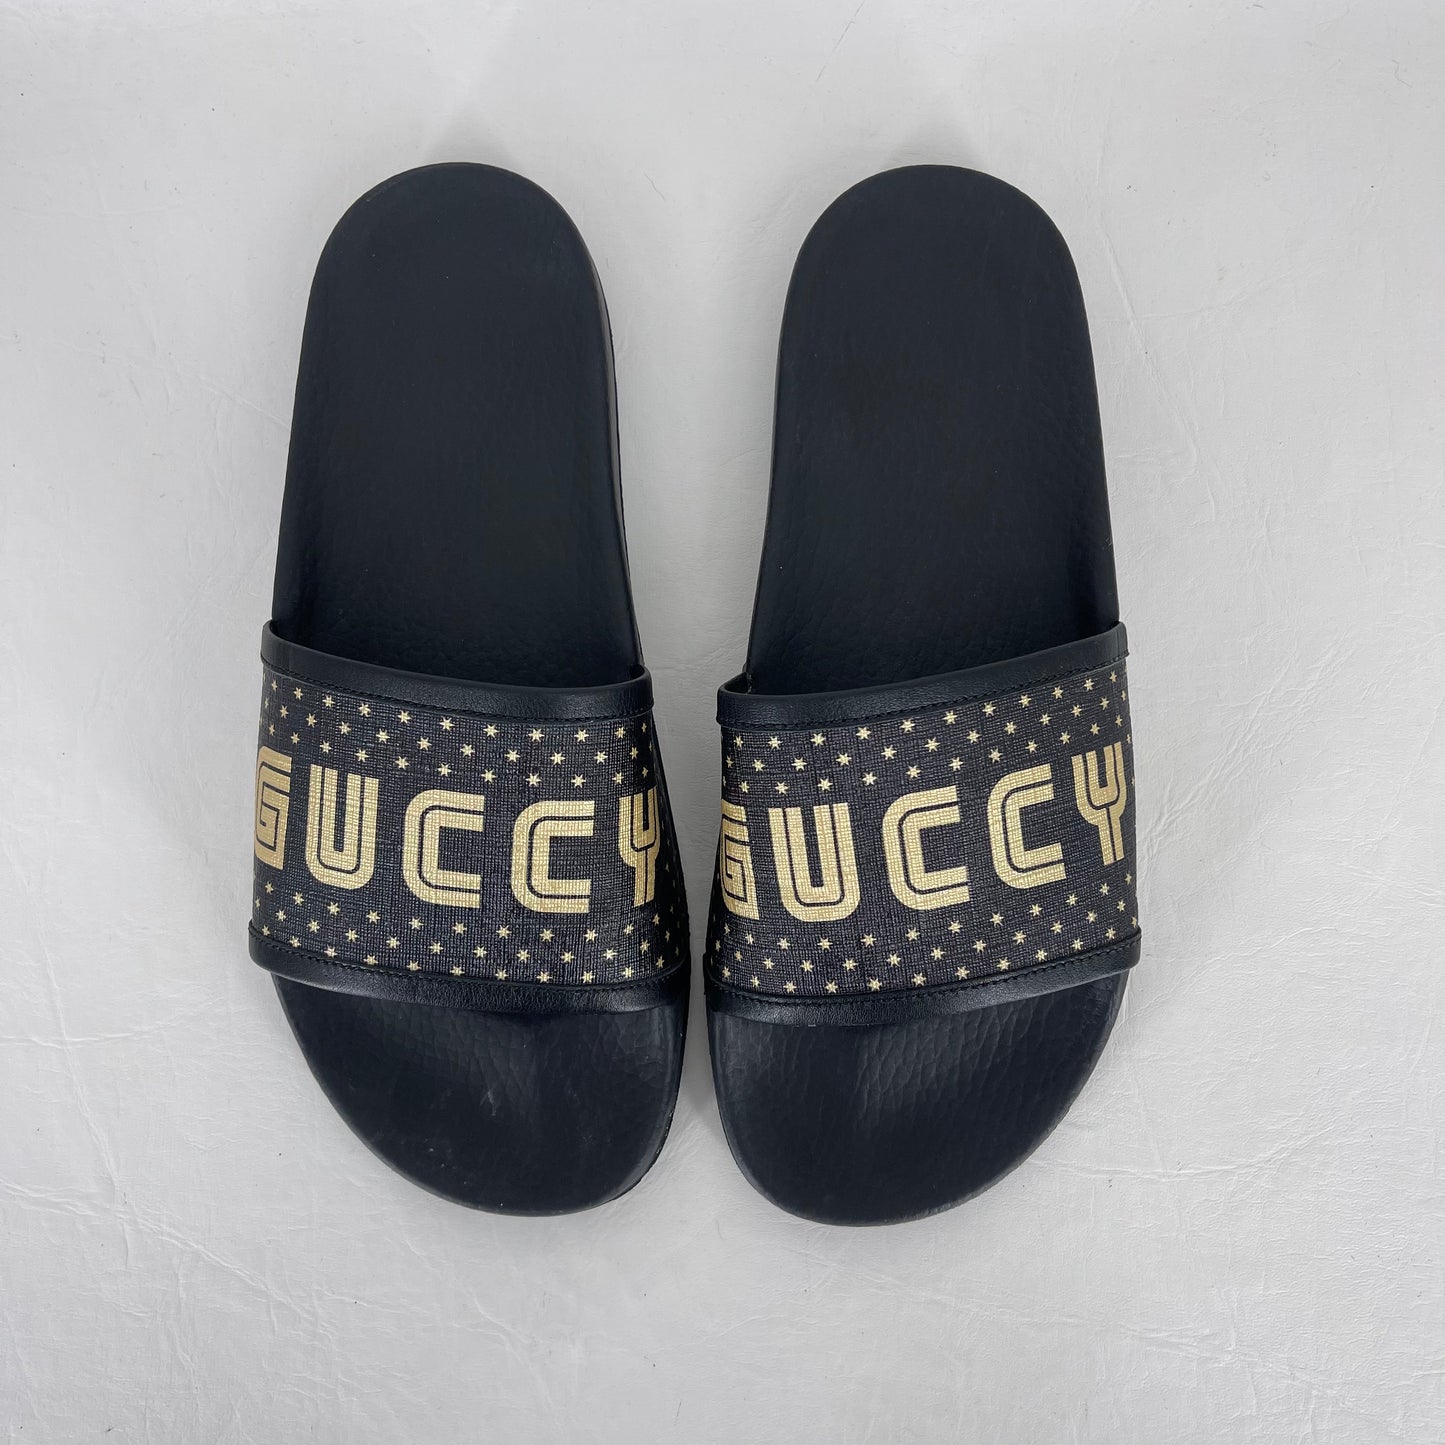 Authentic Gucci Gucci Black Slides